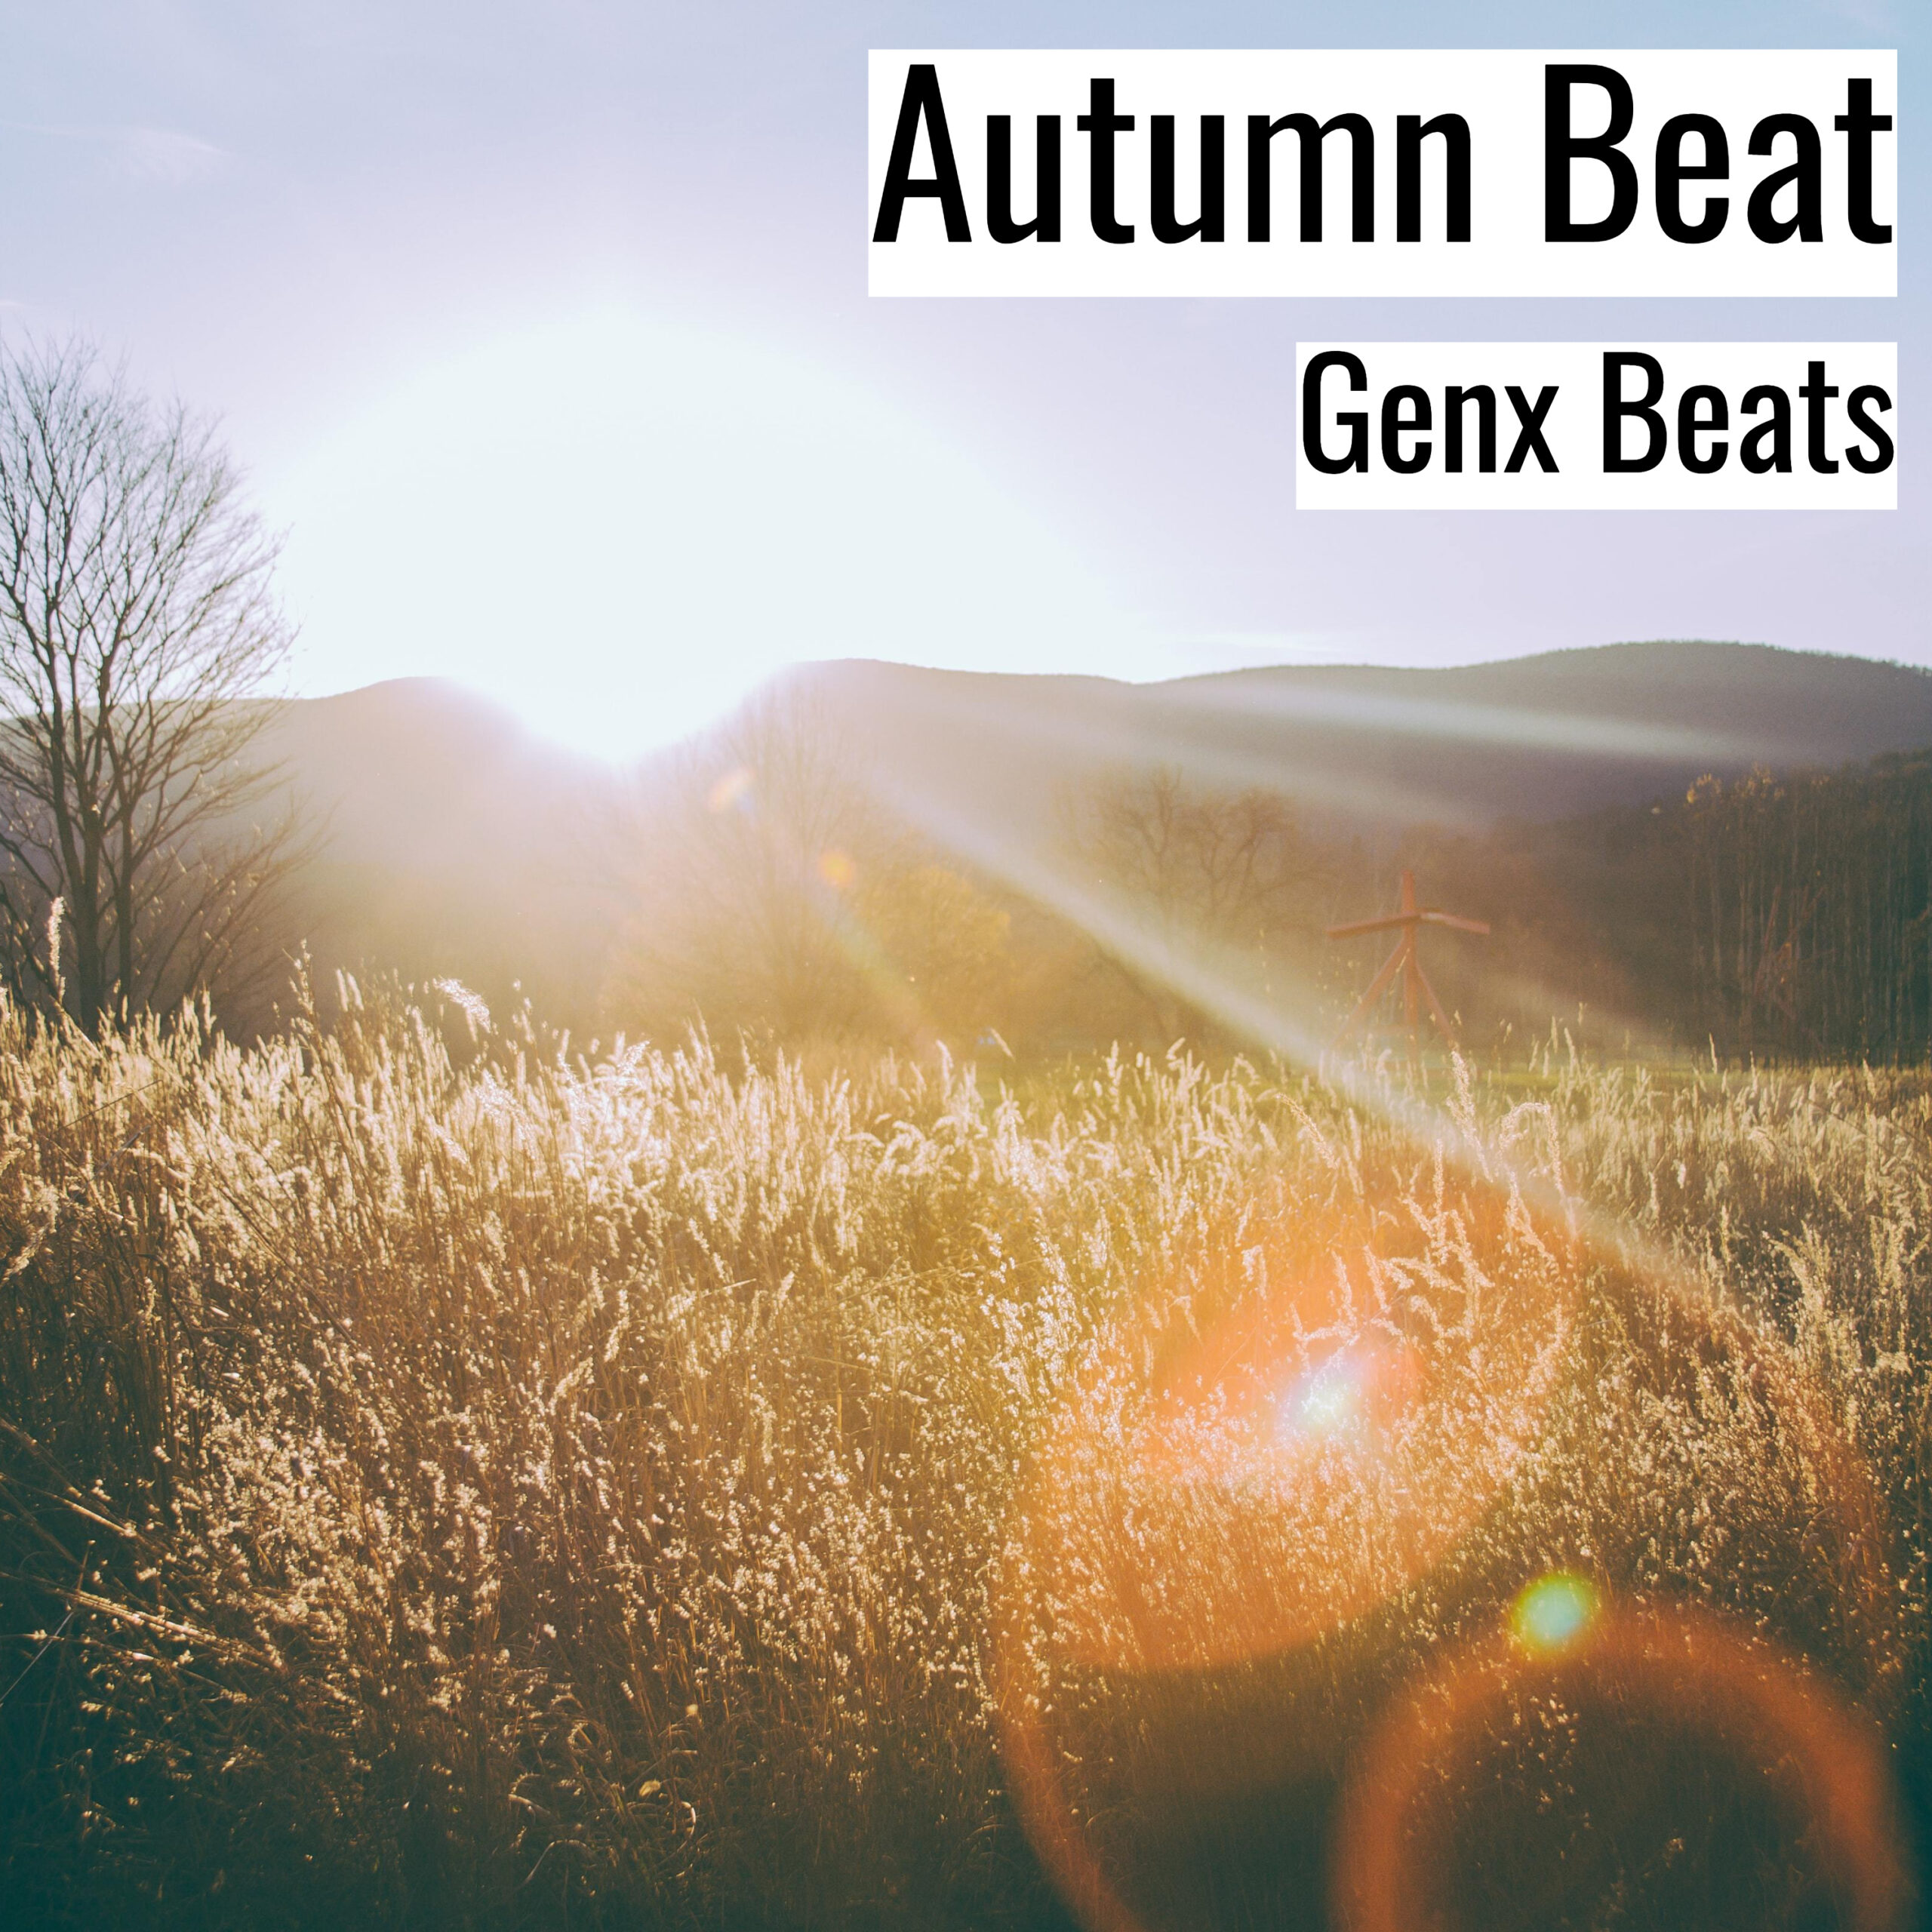 Autumn Beat scaled